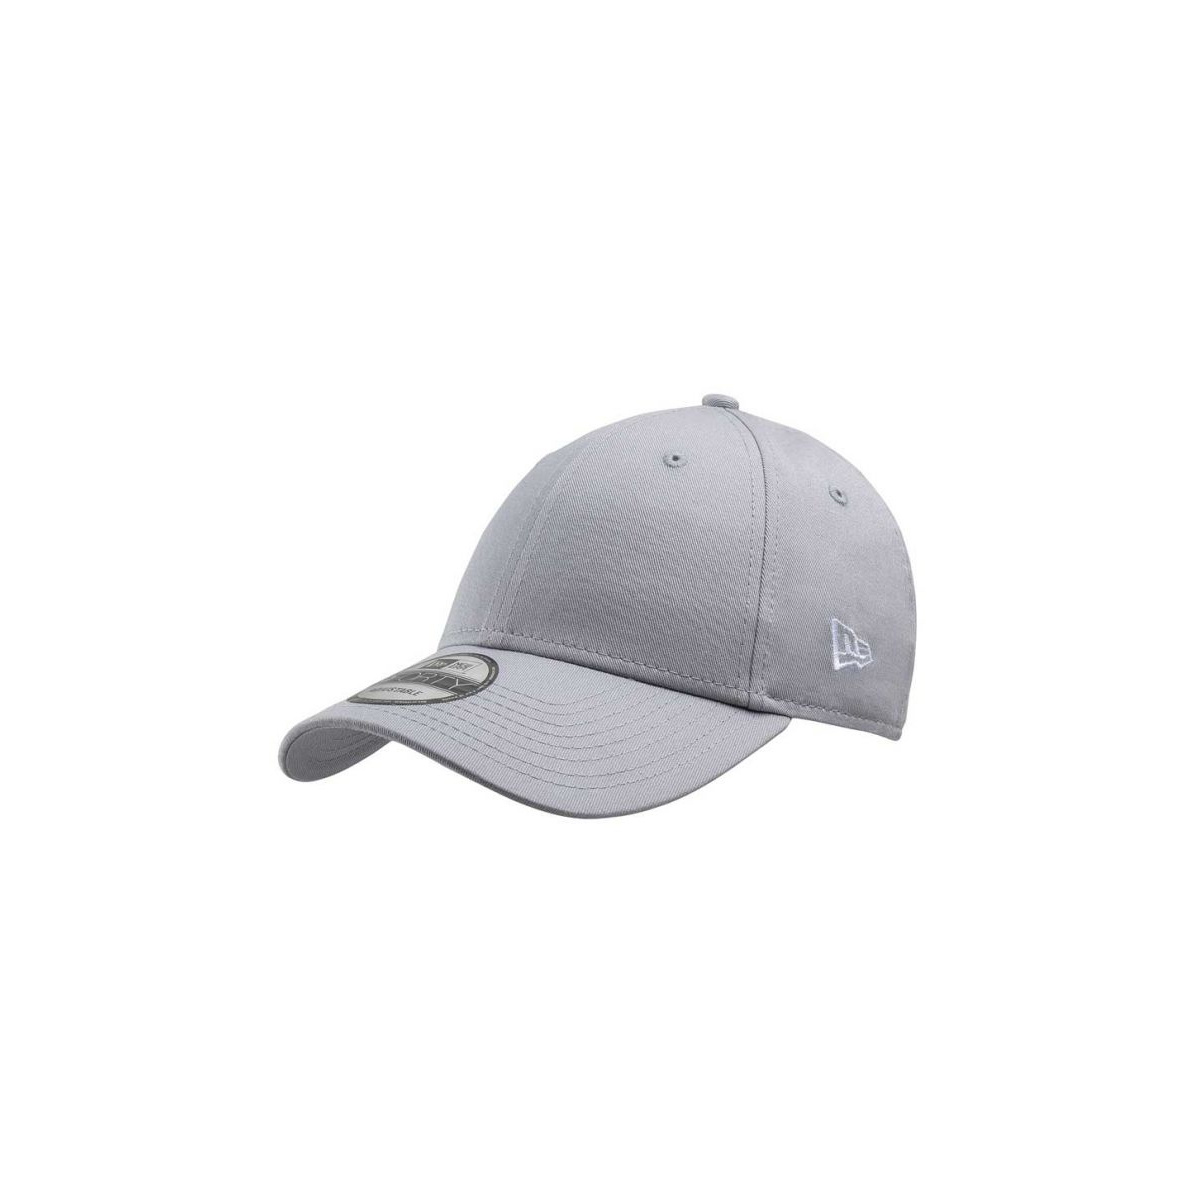 Baseball Cap Basic Grey - Era Reference 10701 | Chapellerie Traclet